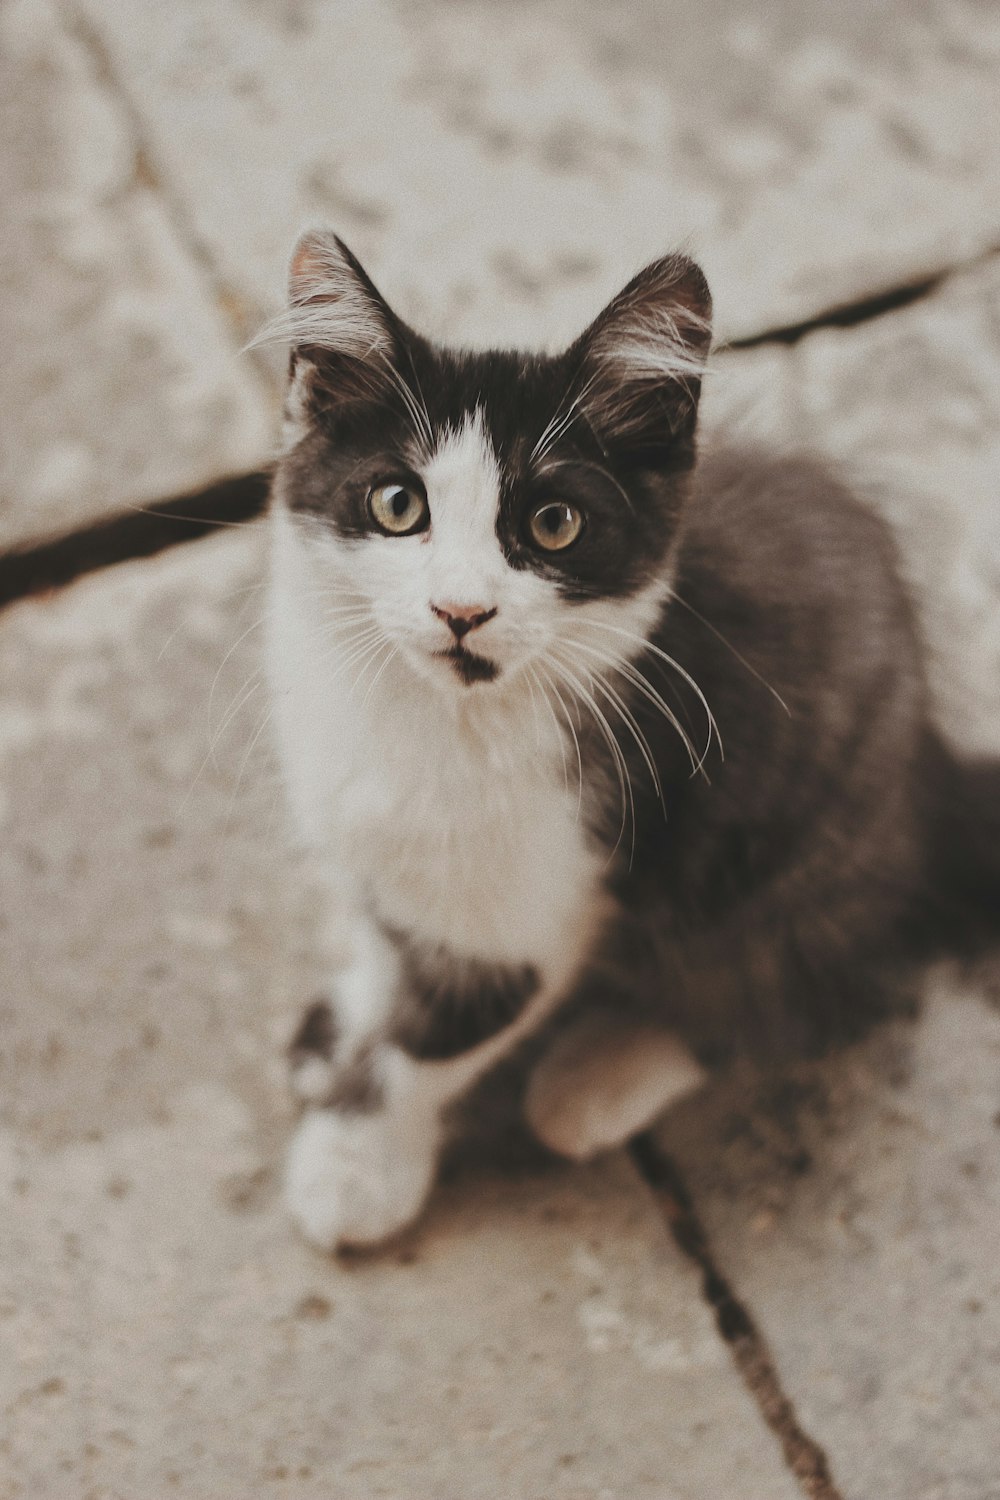 cat sitting on gray concrete pavement